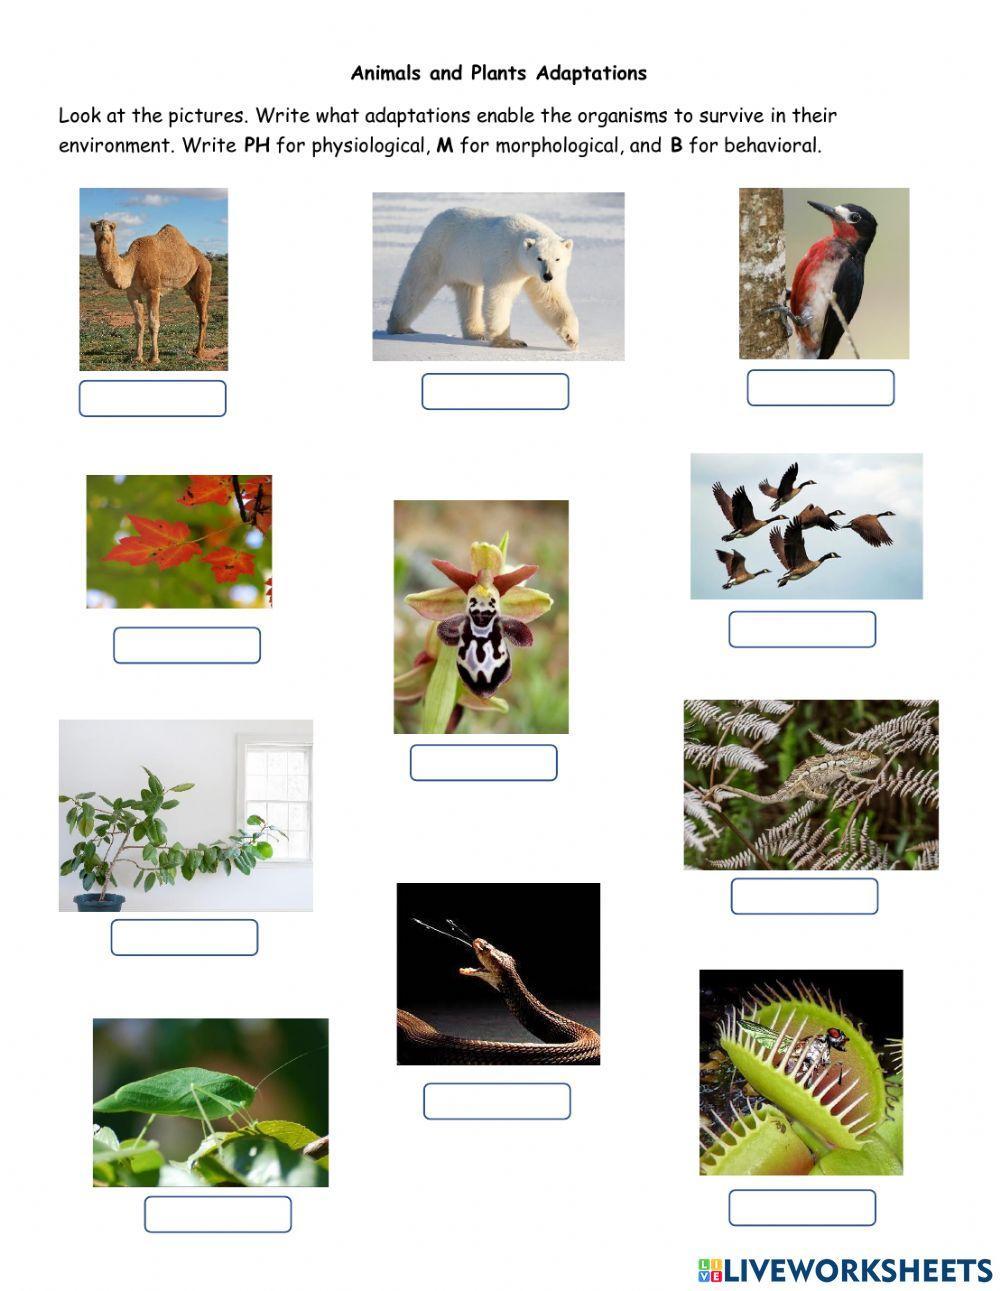 Plants and Animal Adaptations